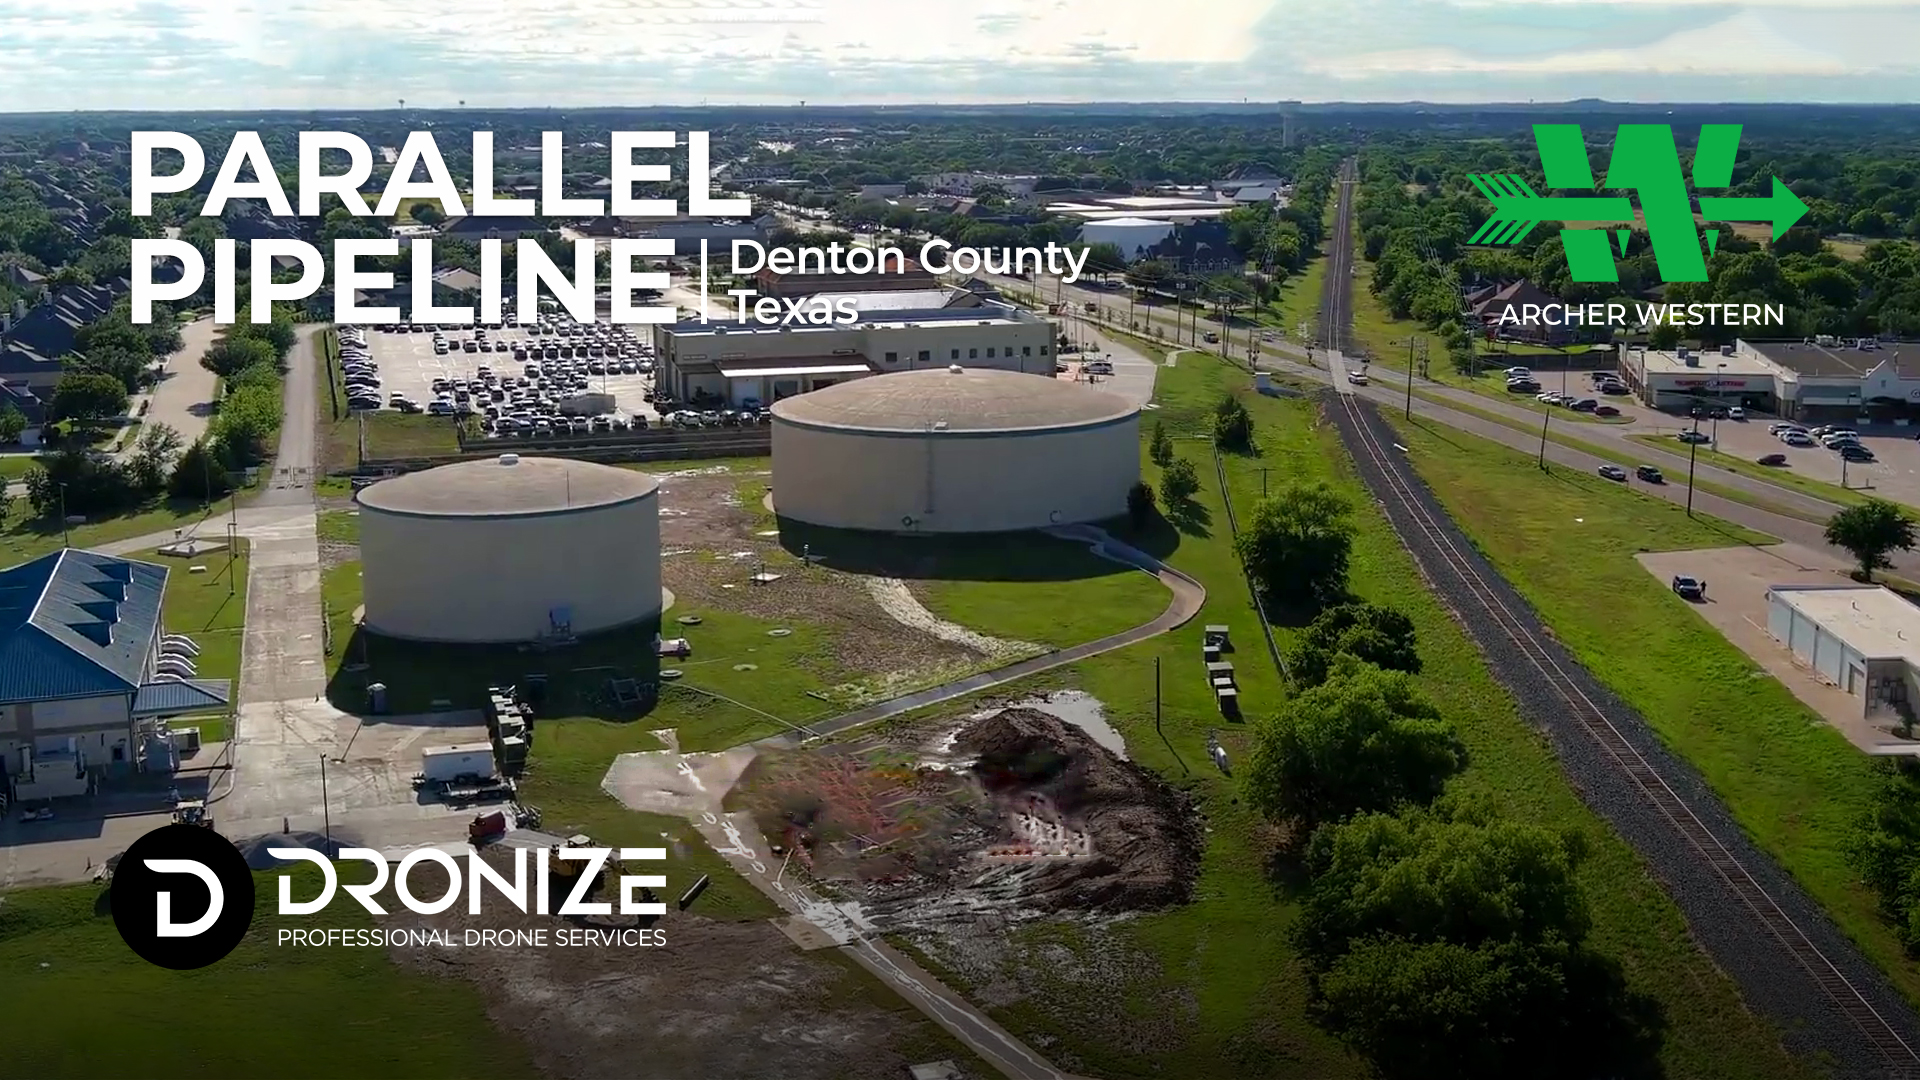 Parallel Pipeline | Denton County, TX